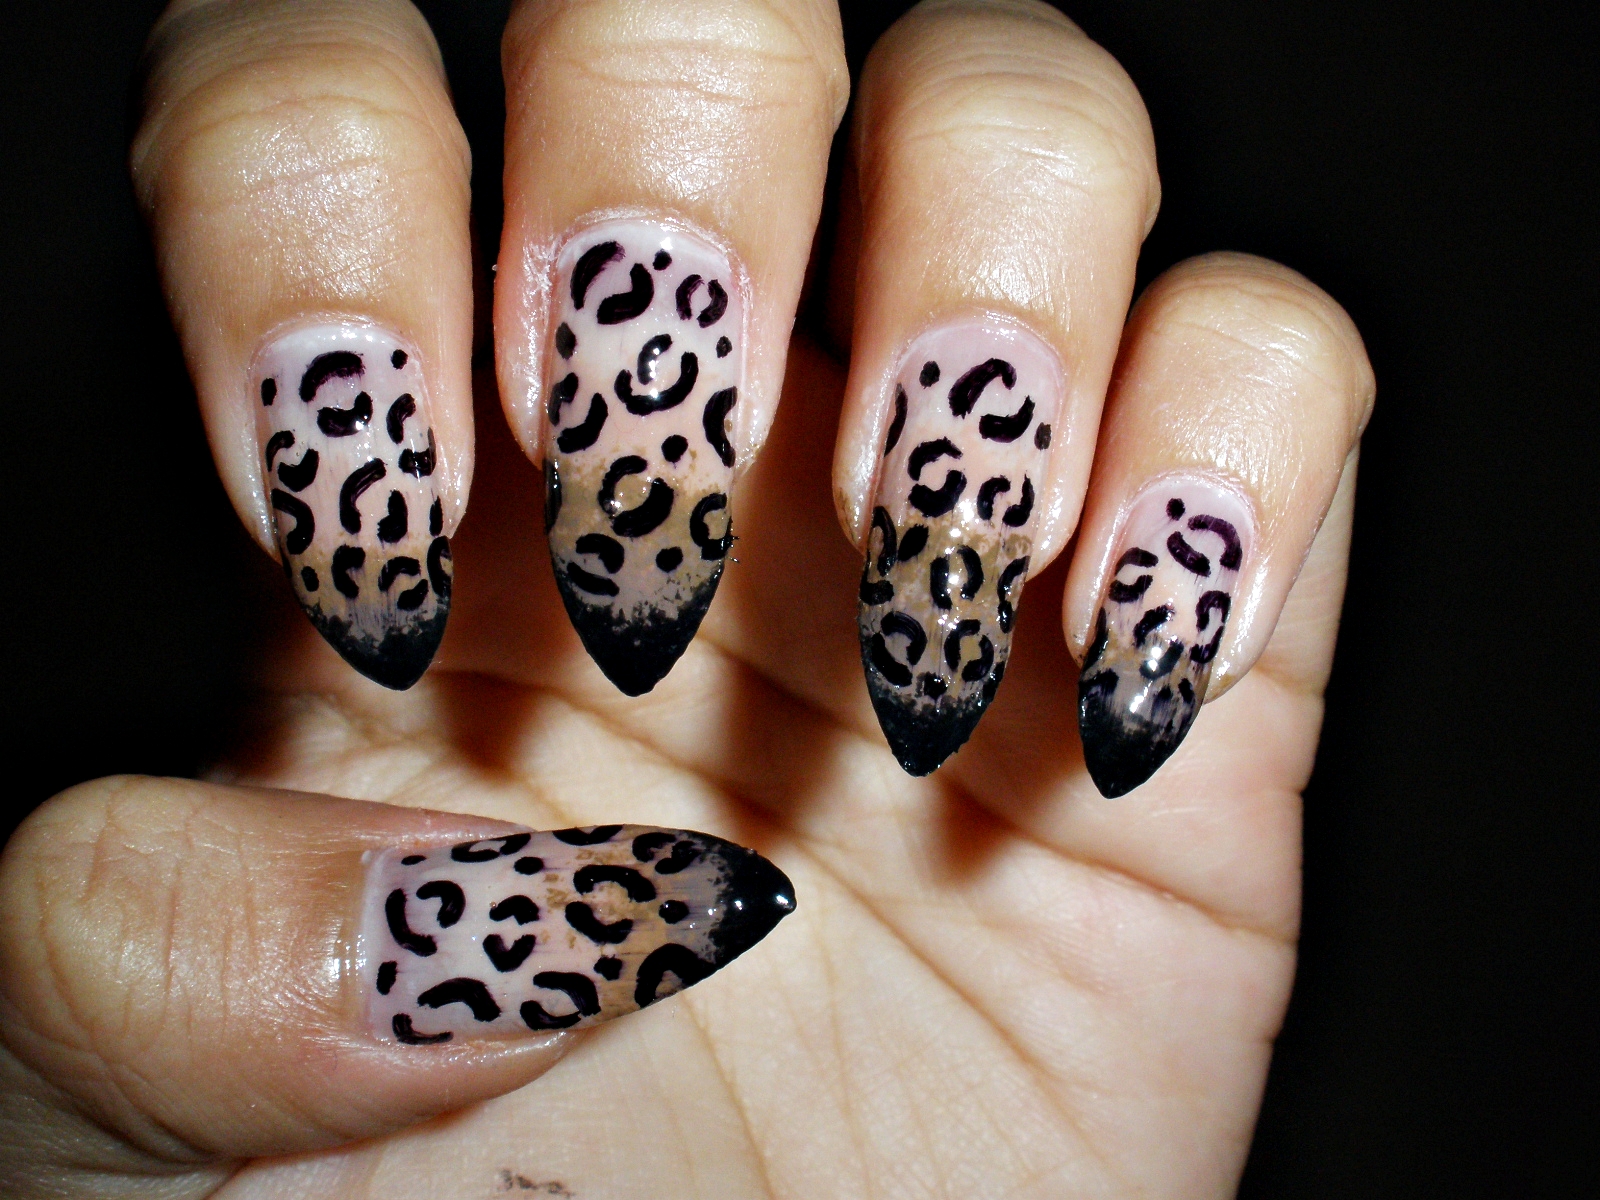 8. Cute Cheetah Nail Designs for Tumblr Aesthetic - wide 4